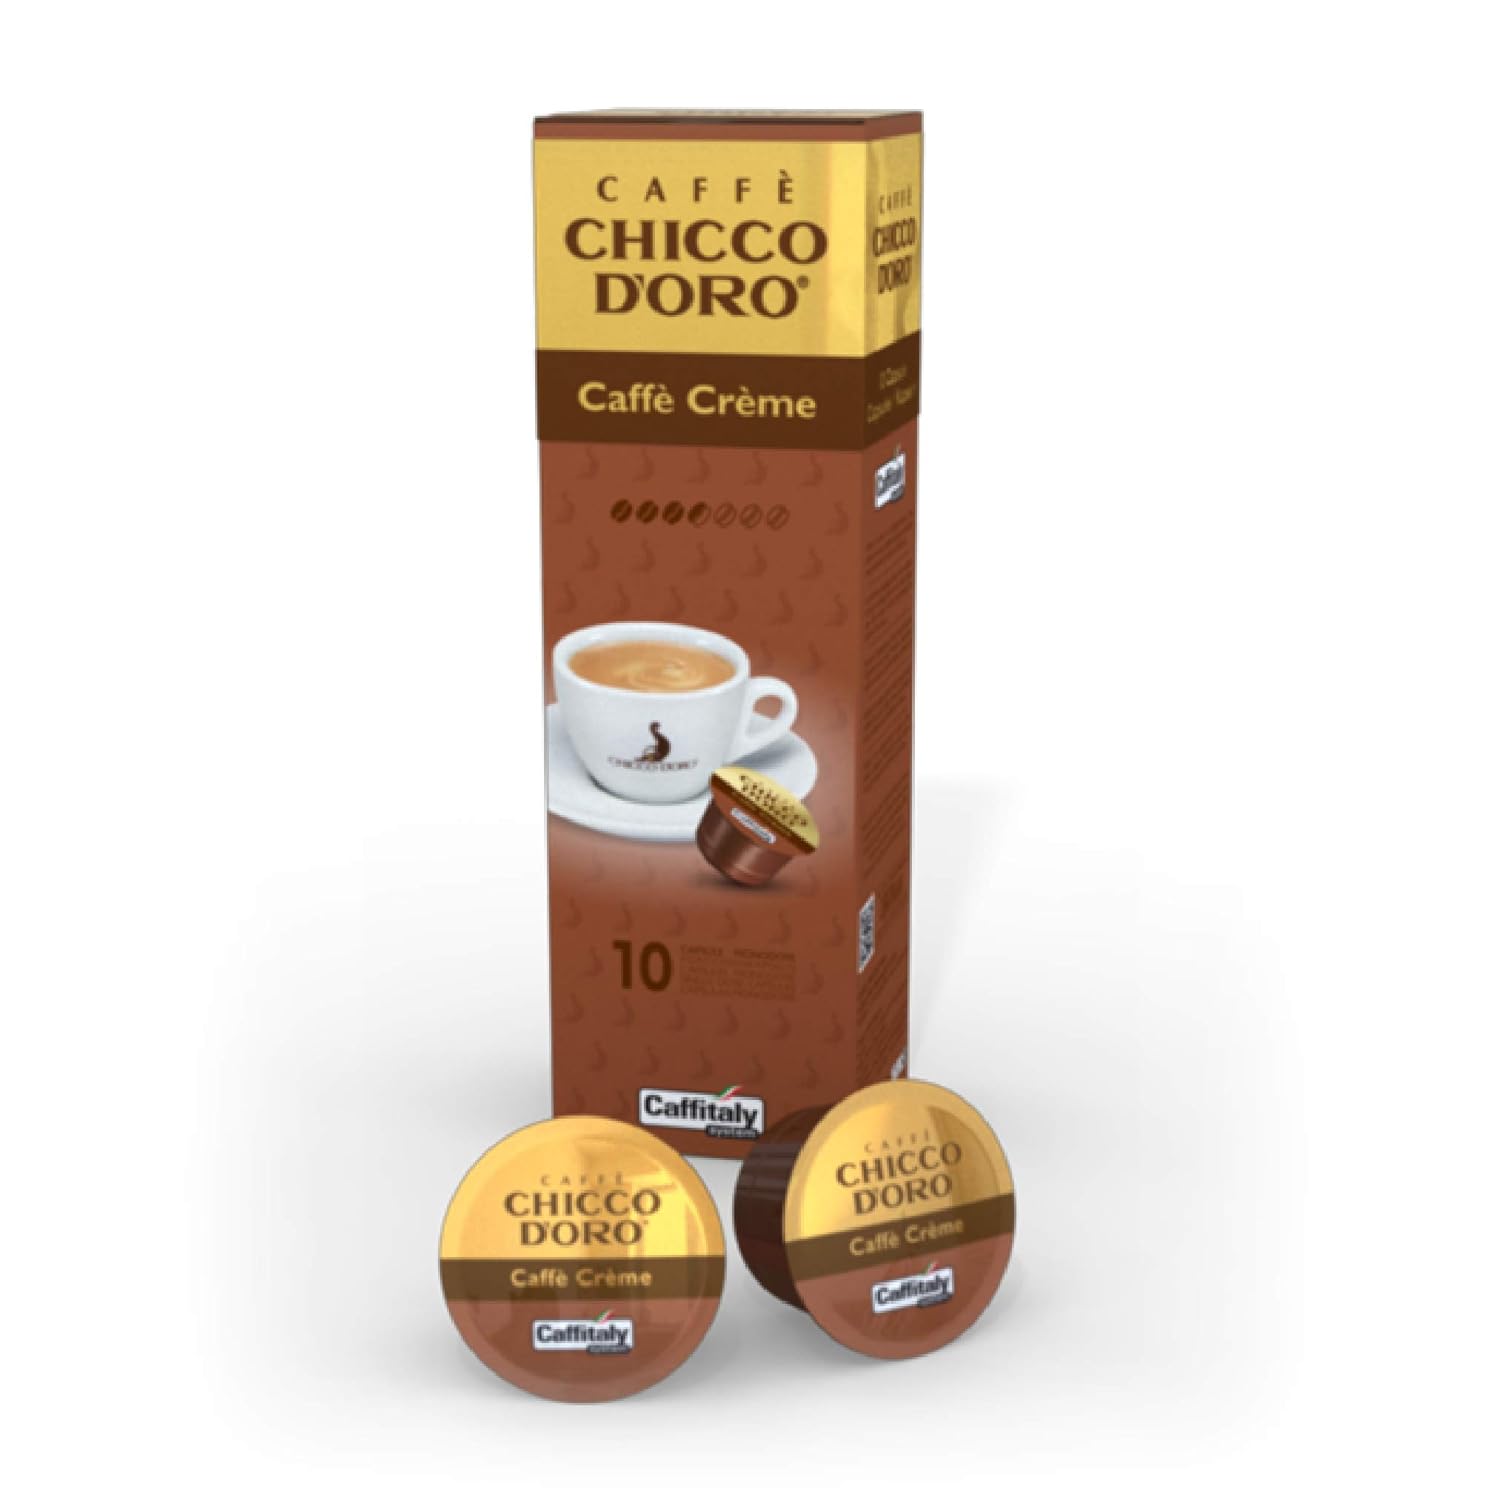 Chiccodoro Caffitaly Caffè Crème, 10 Capsules, 80 g